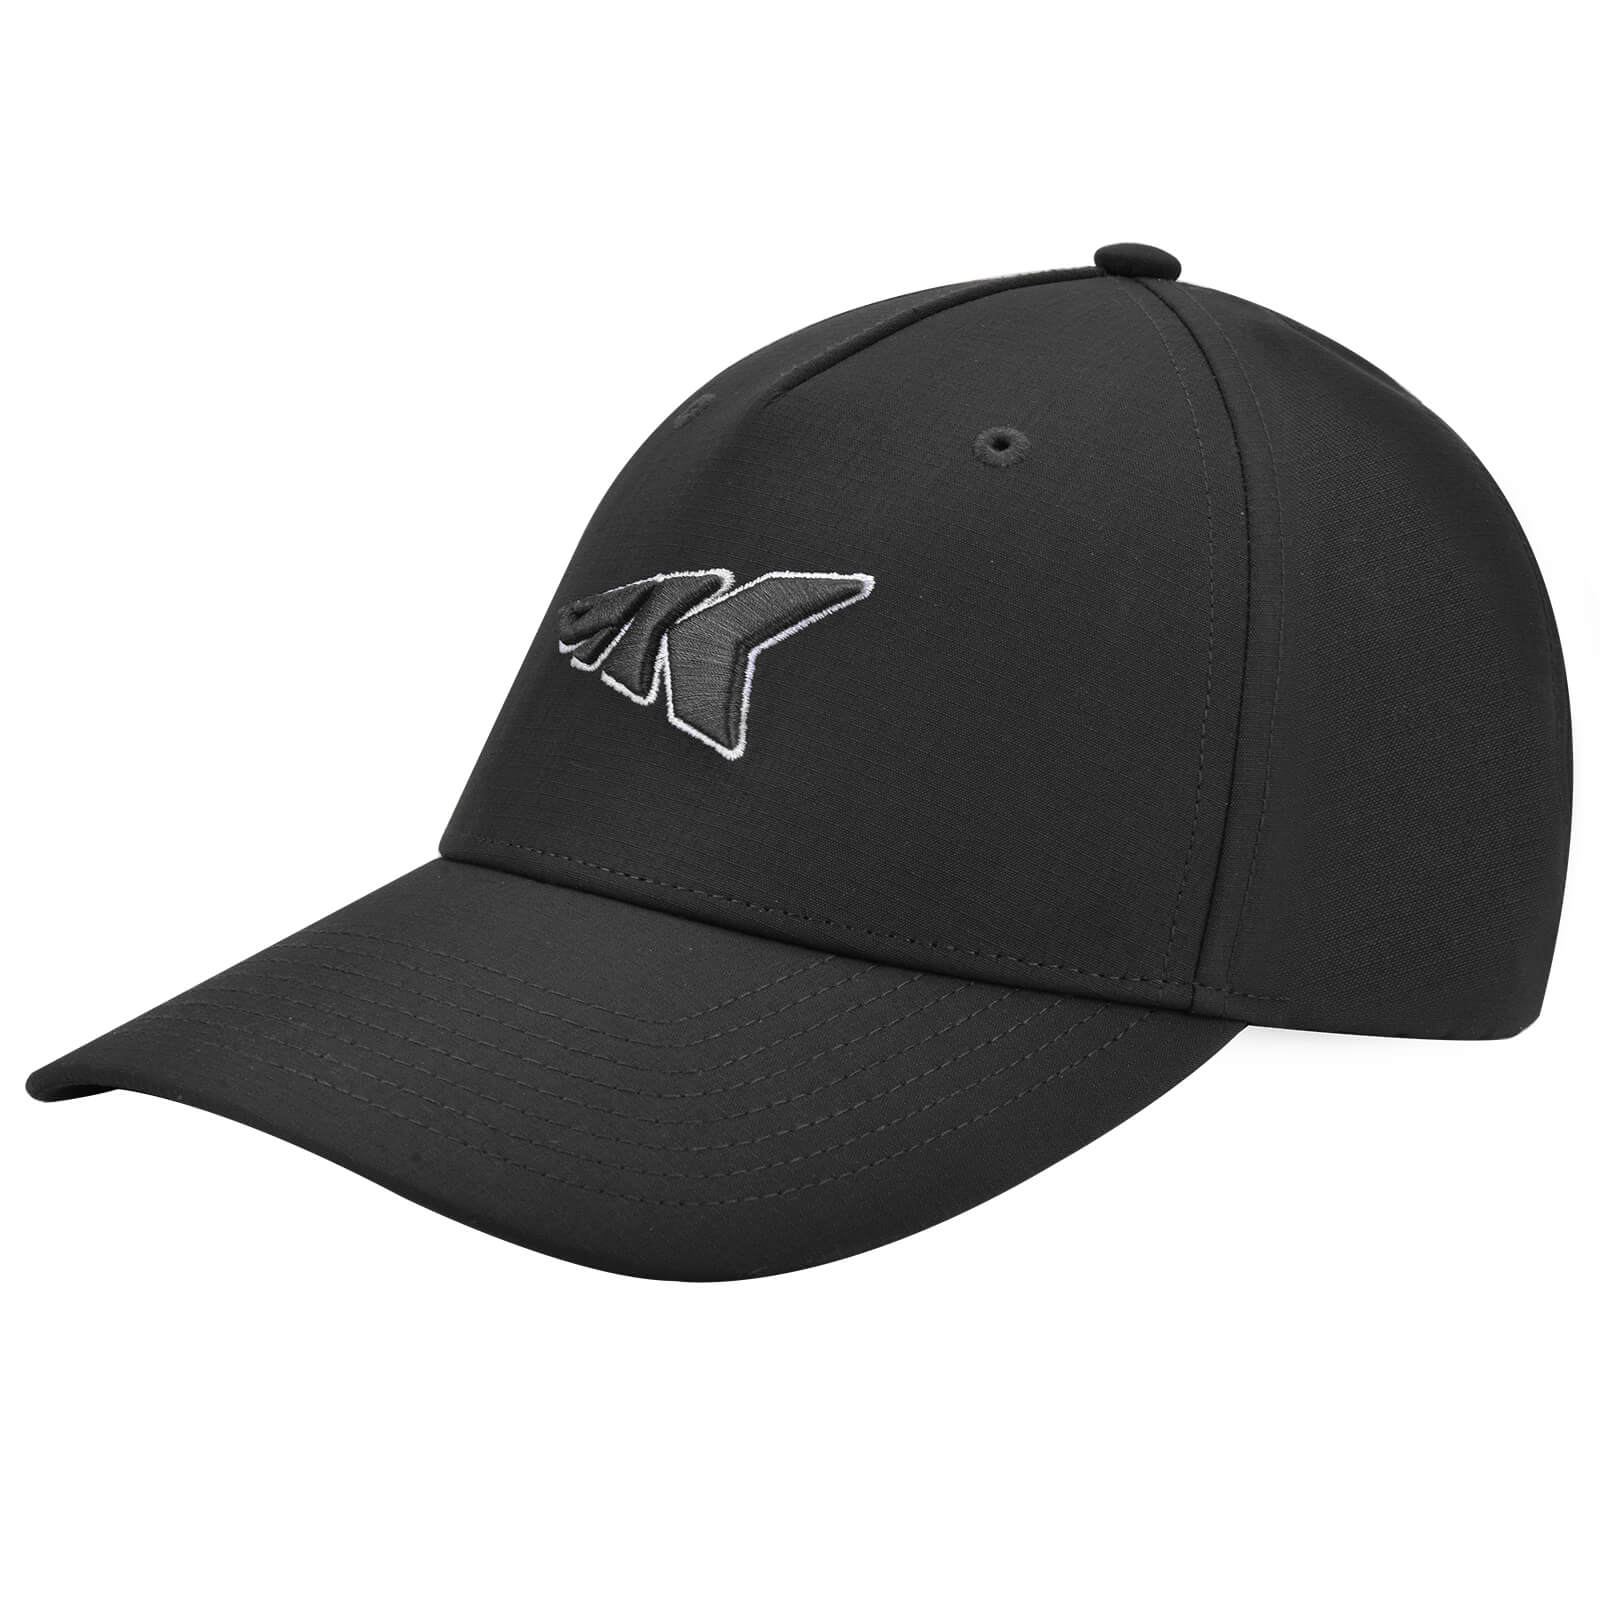 KastKing Official Caps